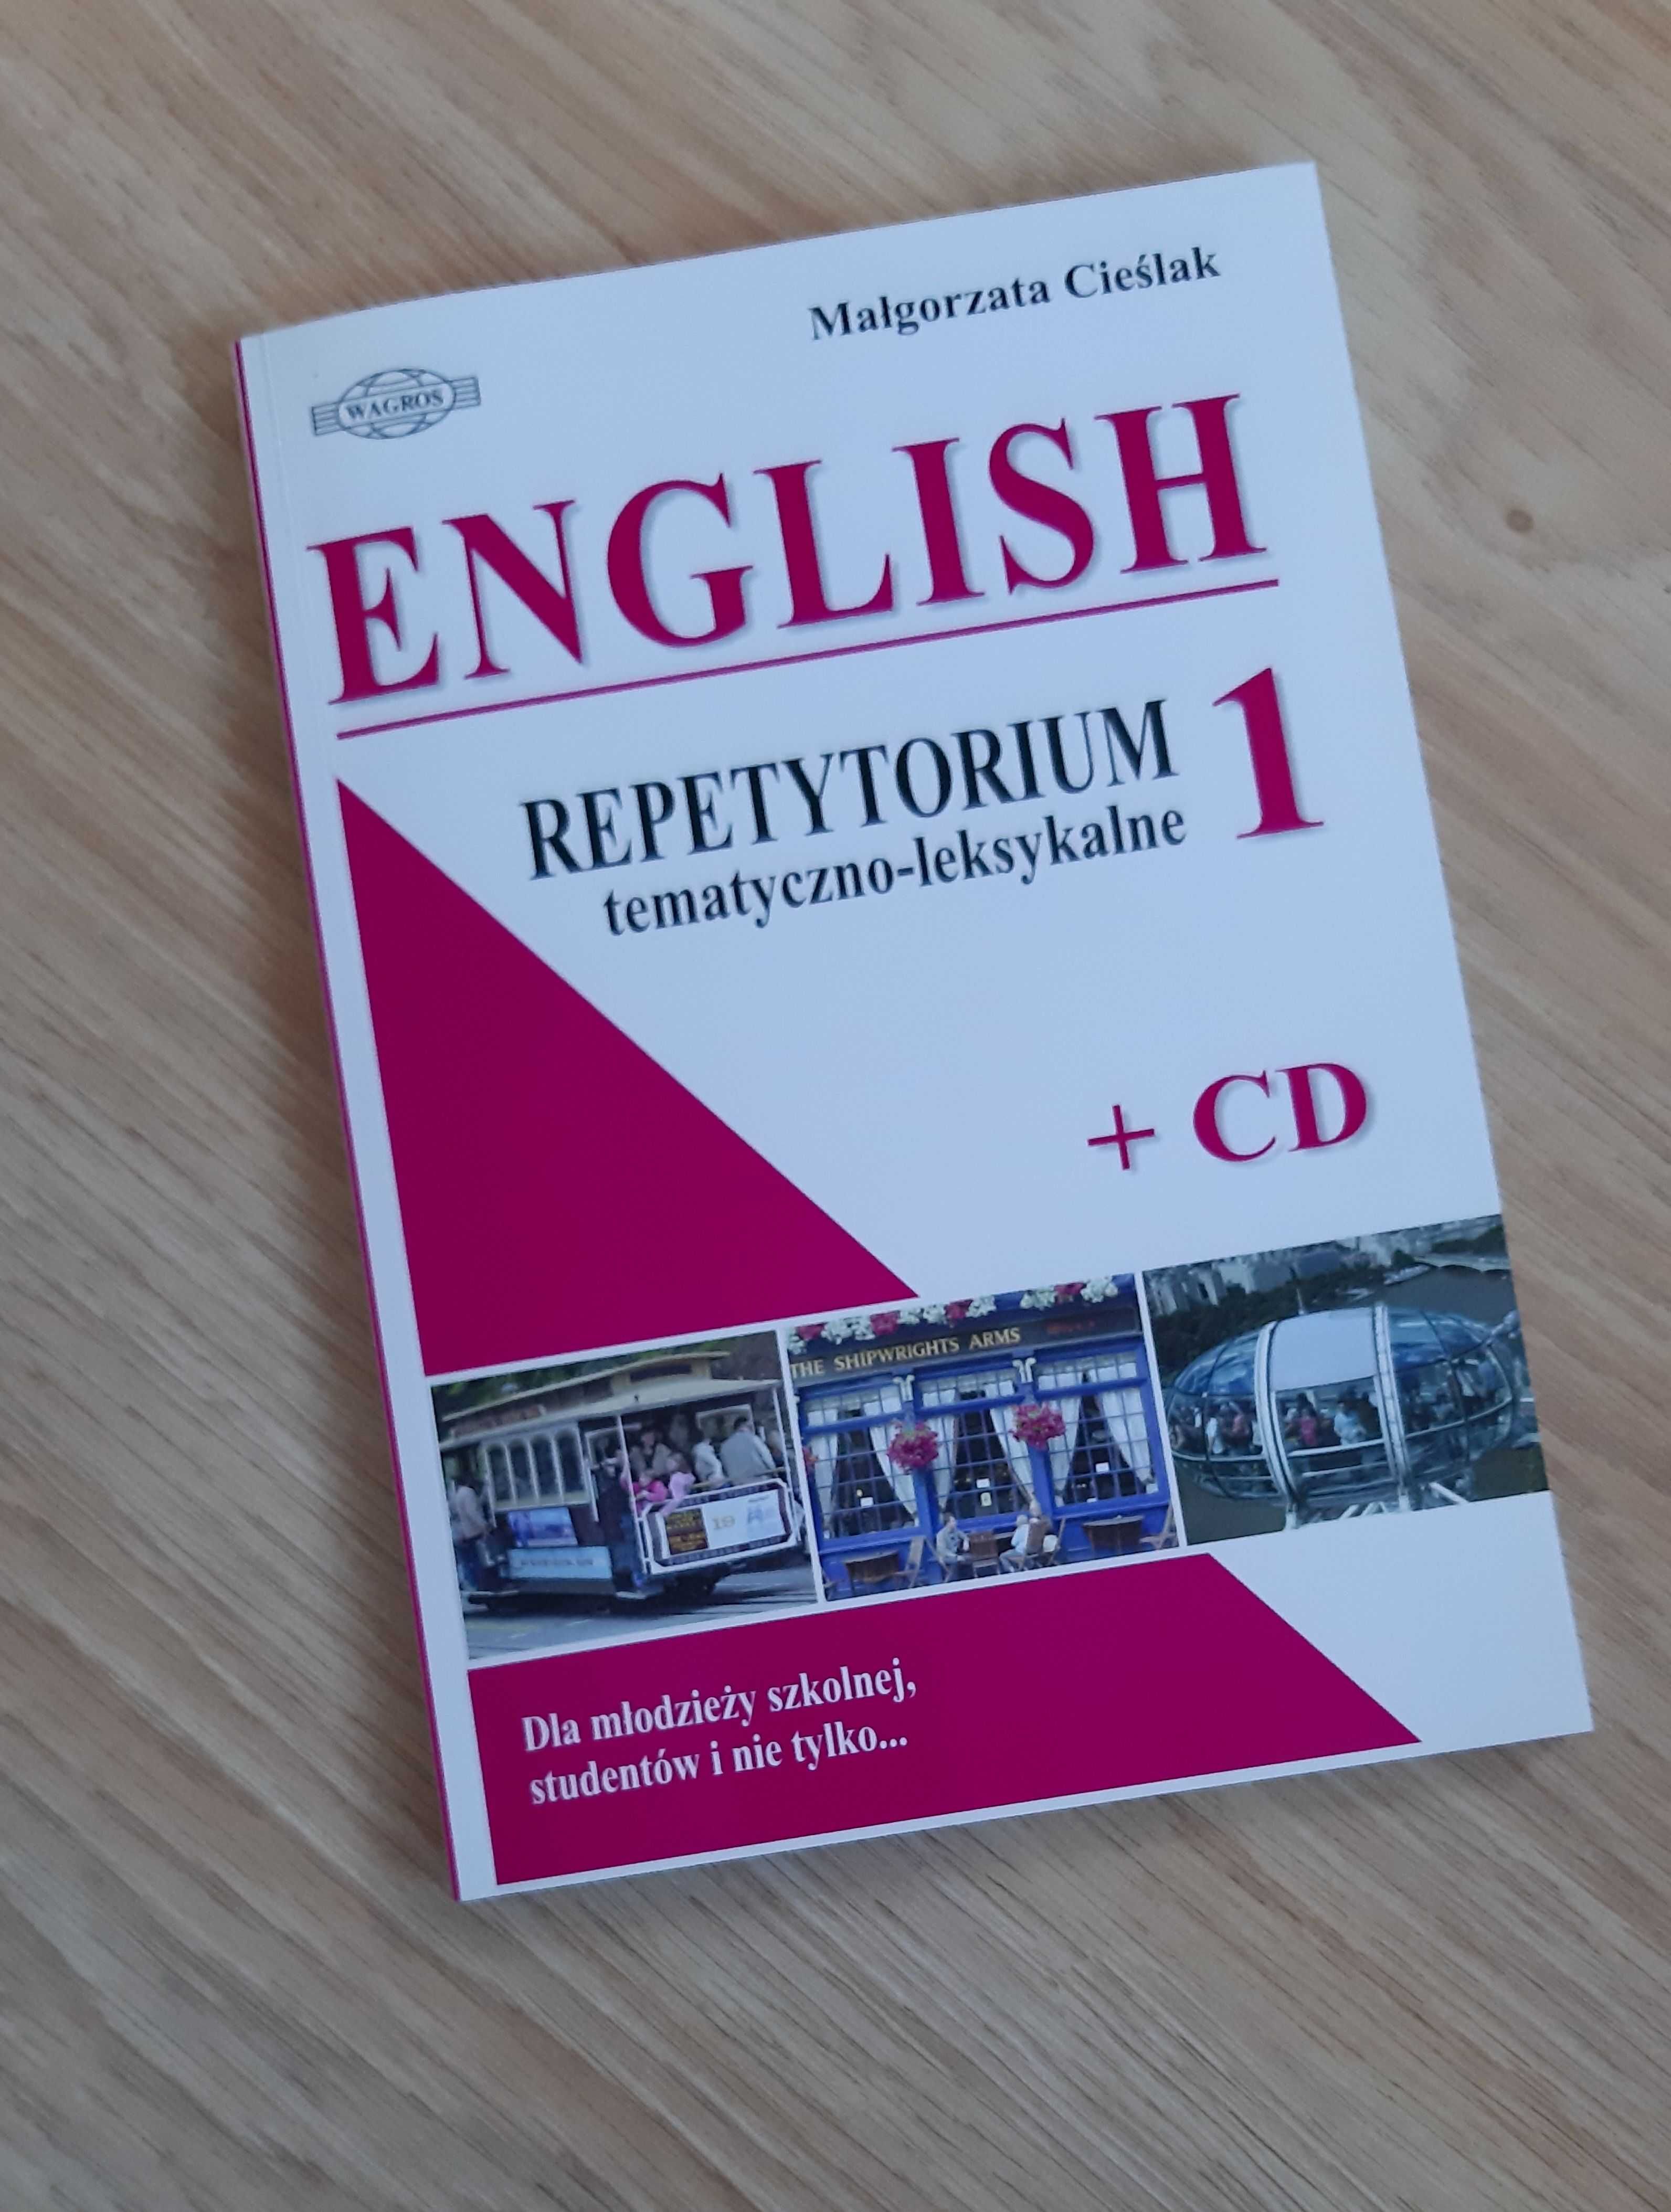 English 1 Repetytorium tematyczno-leksykalne + CD